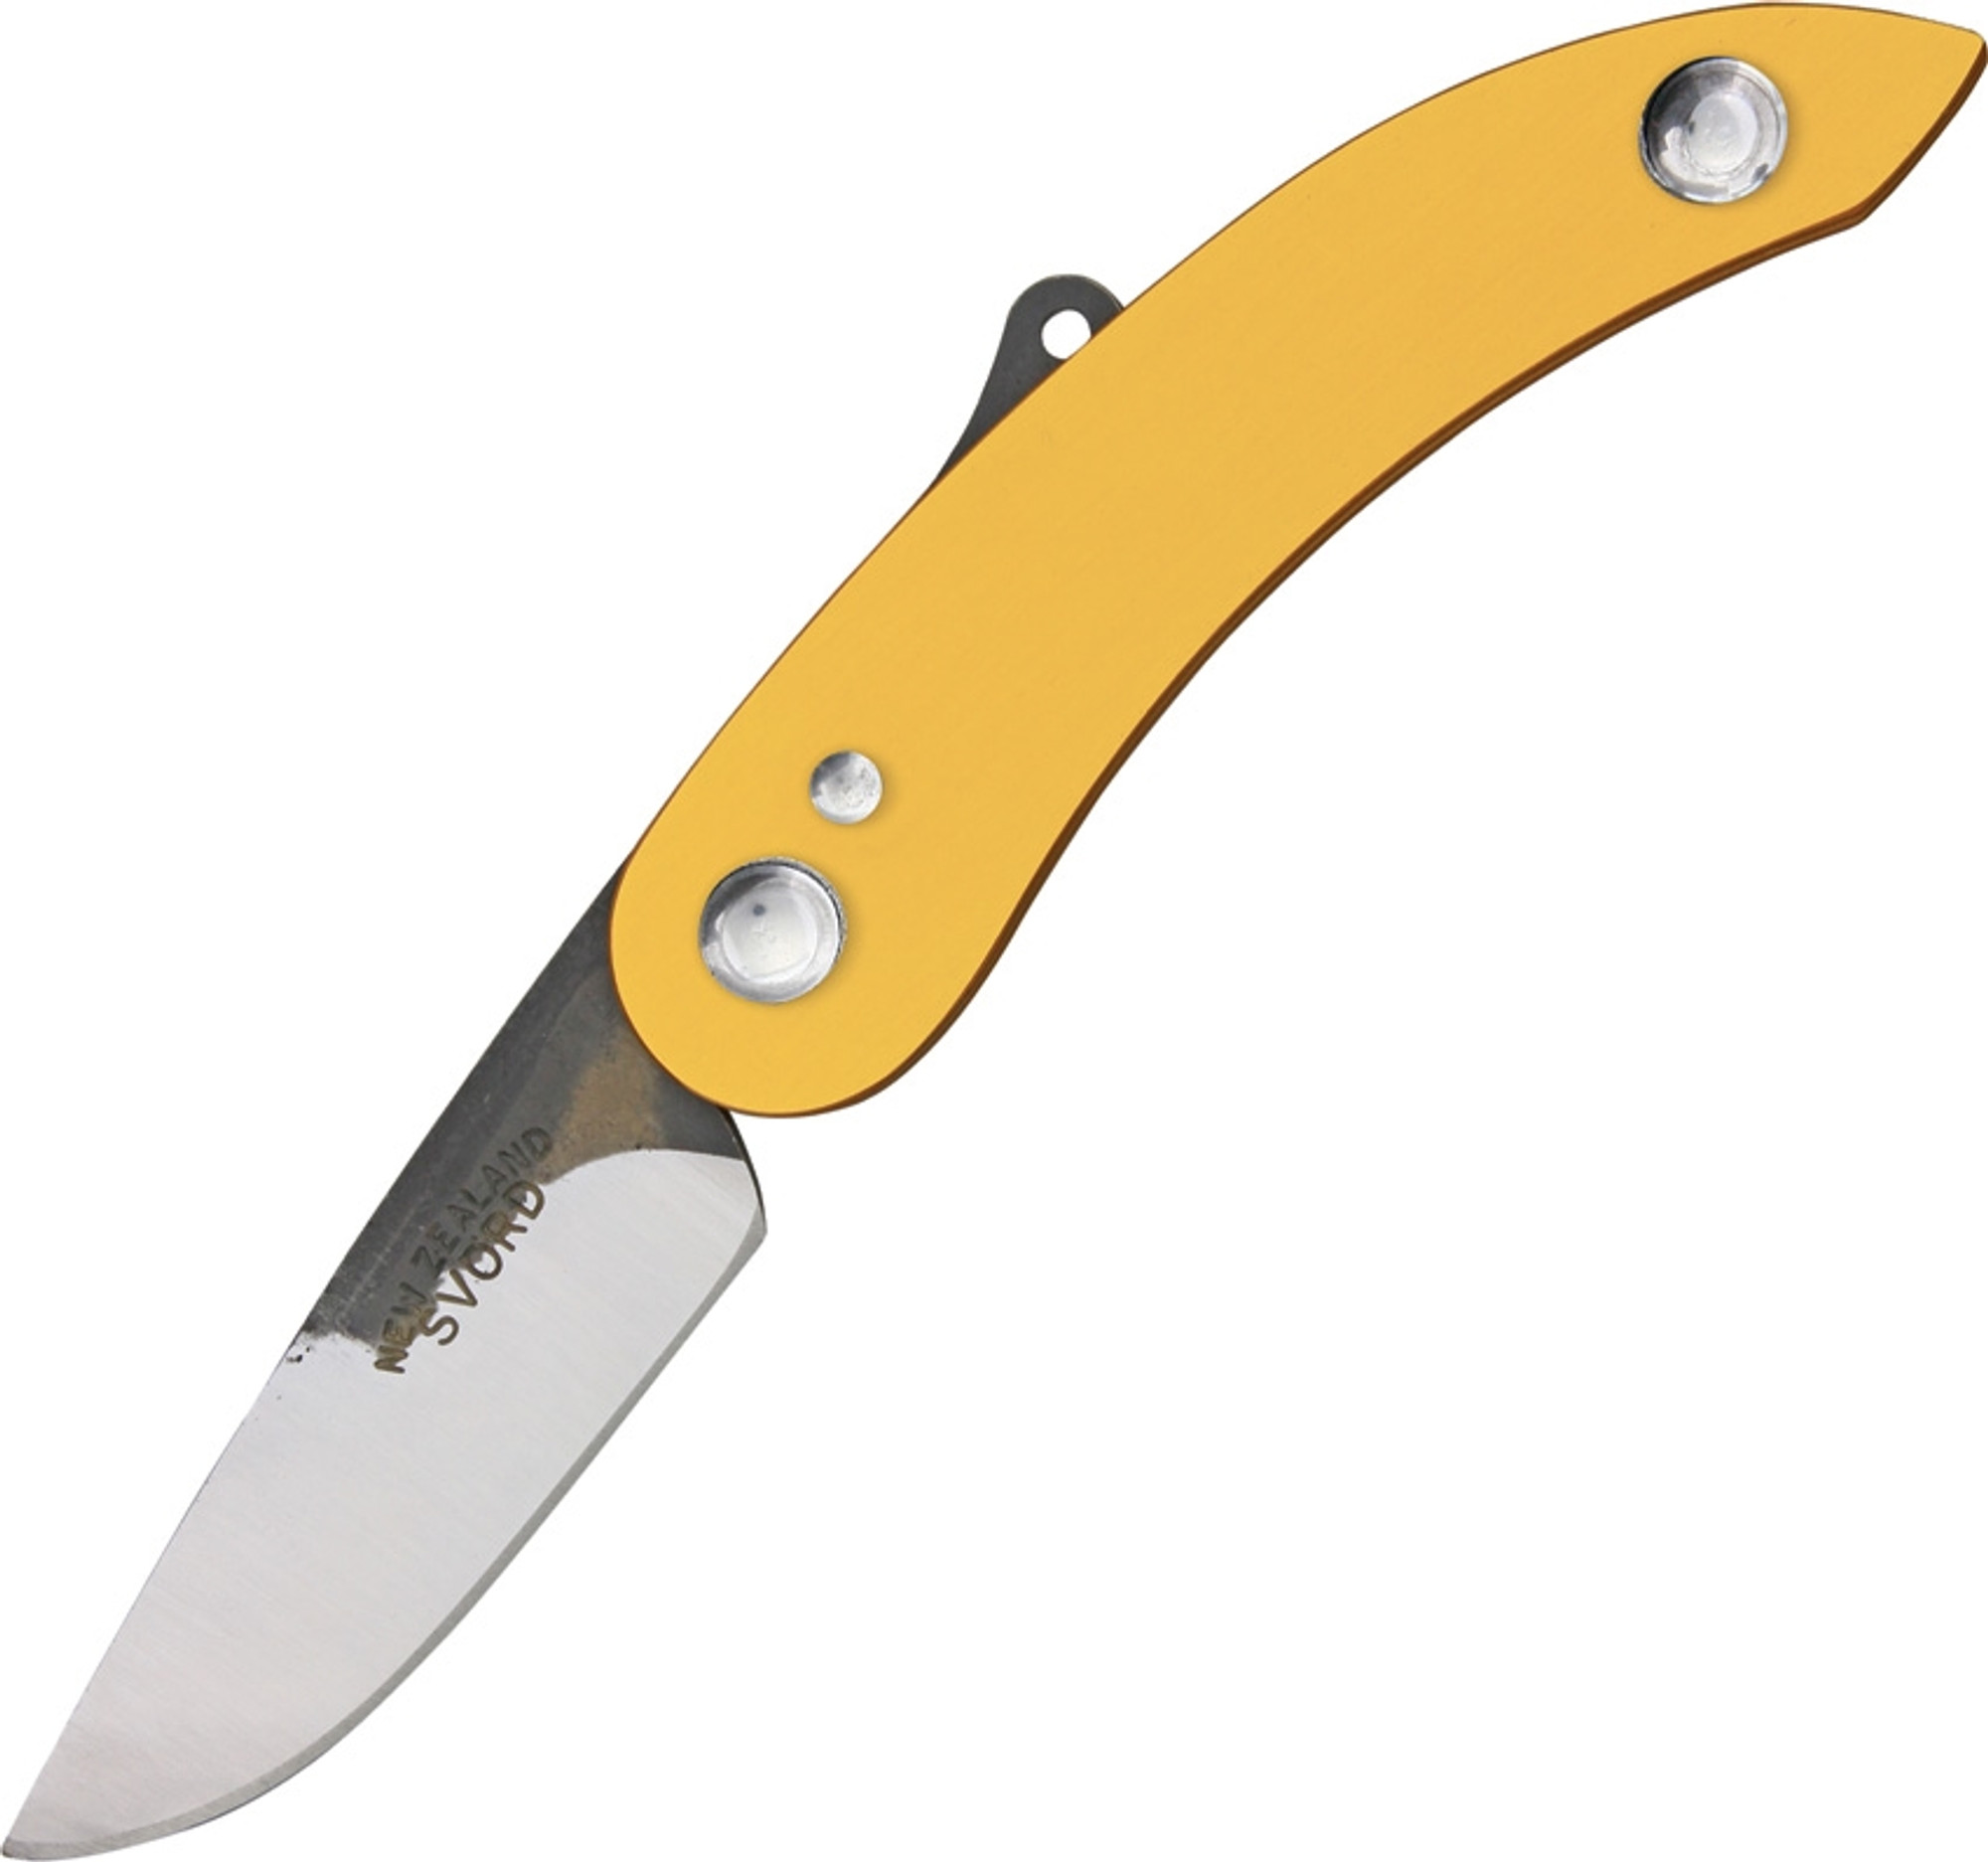 Svord SV163 Slim Peasant Knife - Aluminum Orange